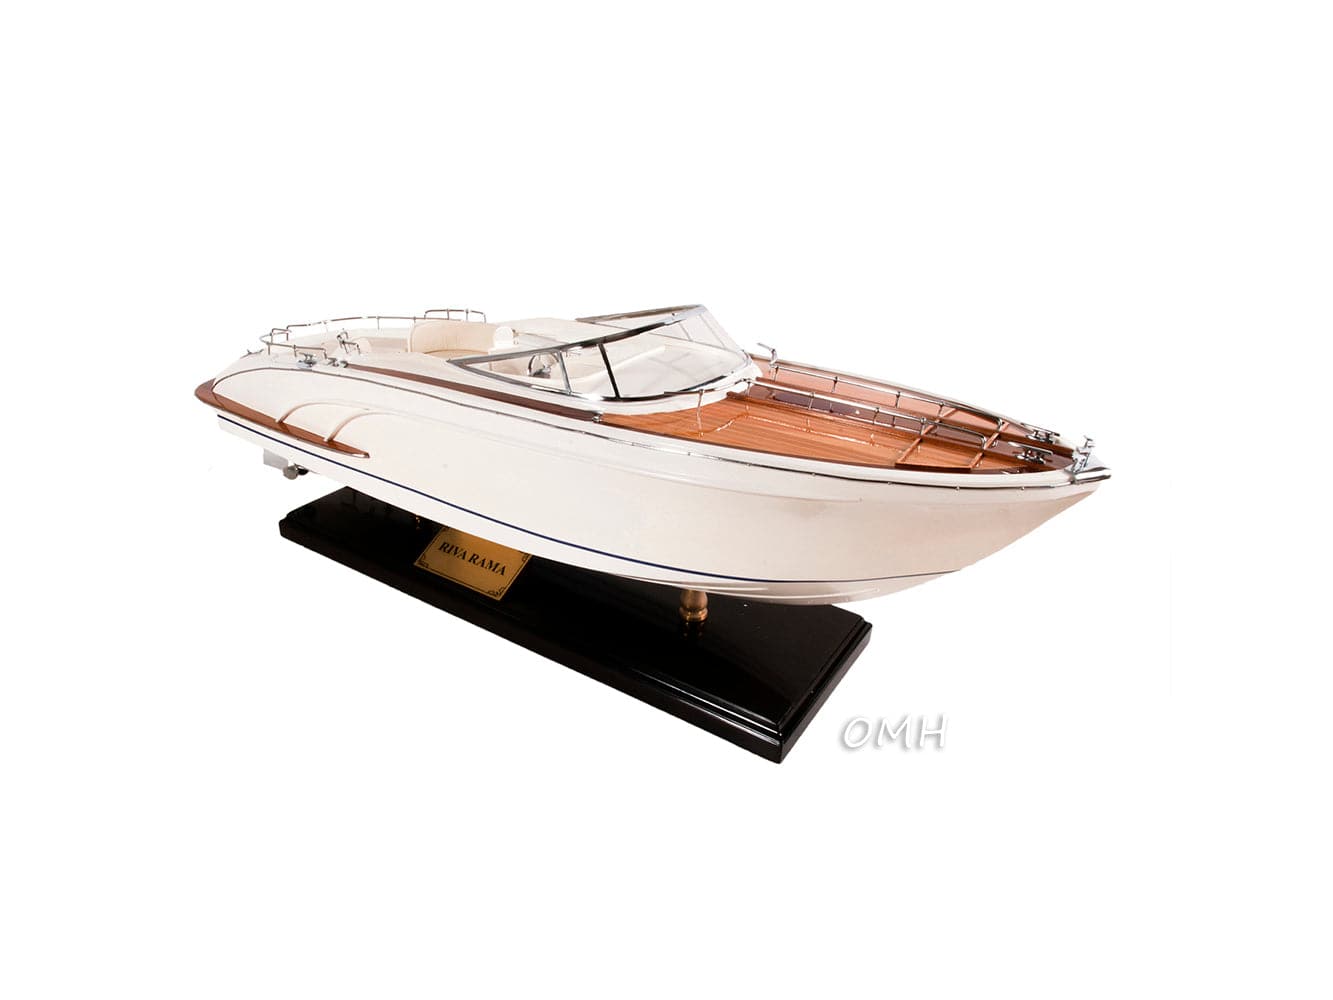 ALDO Hobbies & Creative Arts > Collectibles > Scale Models Italian Speed Boat Rivarama large Model Ship Assembled